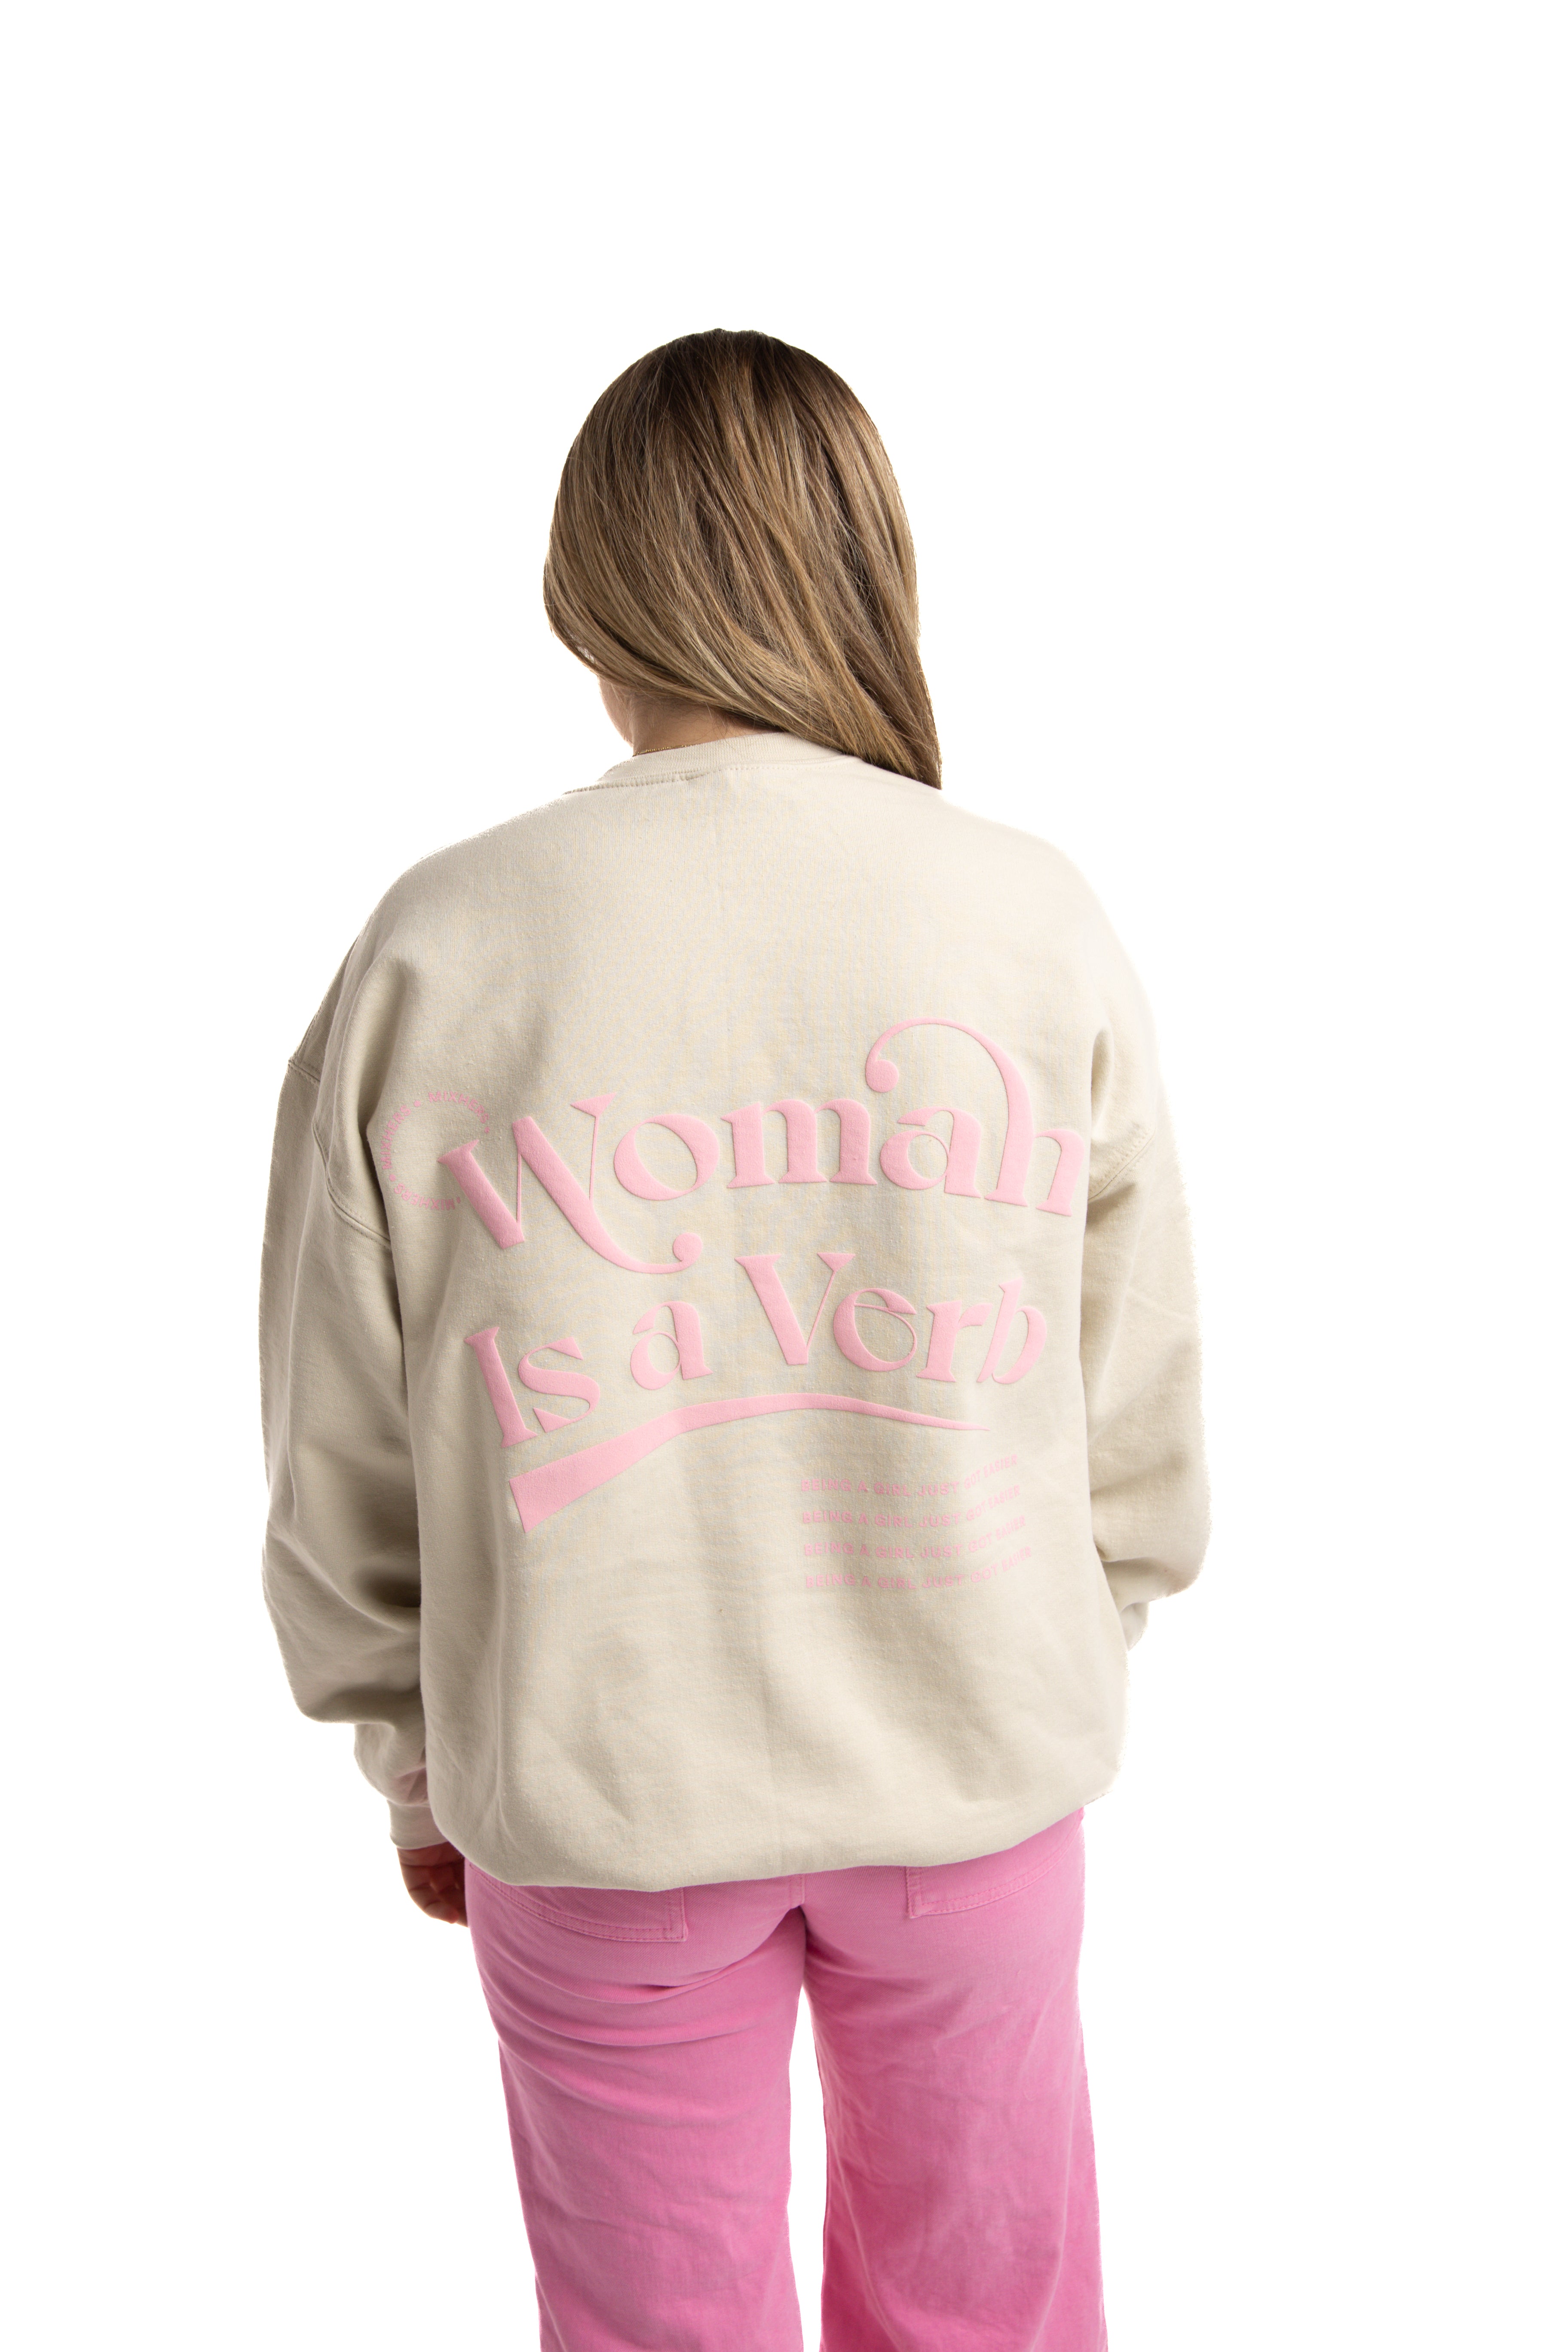 Woman is a Verb Sweatshirt image 1